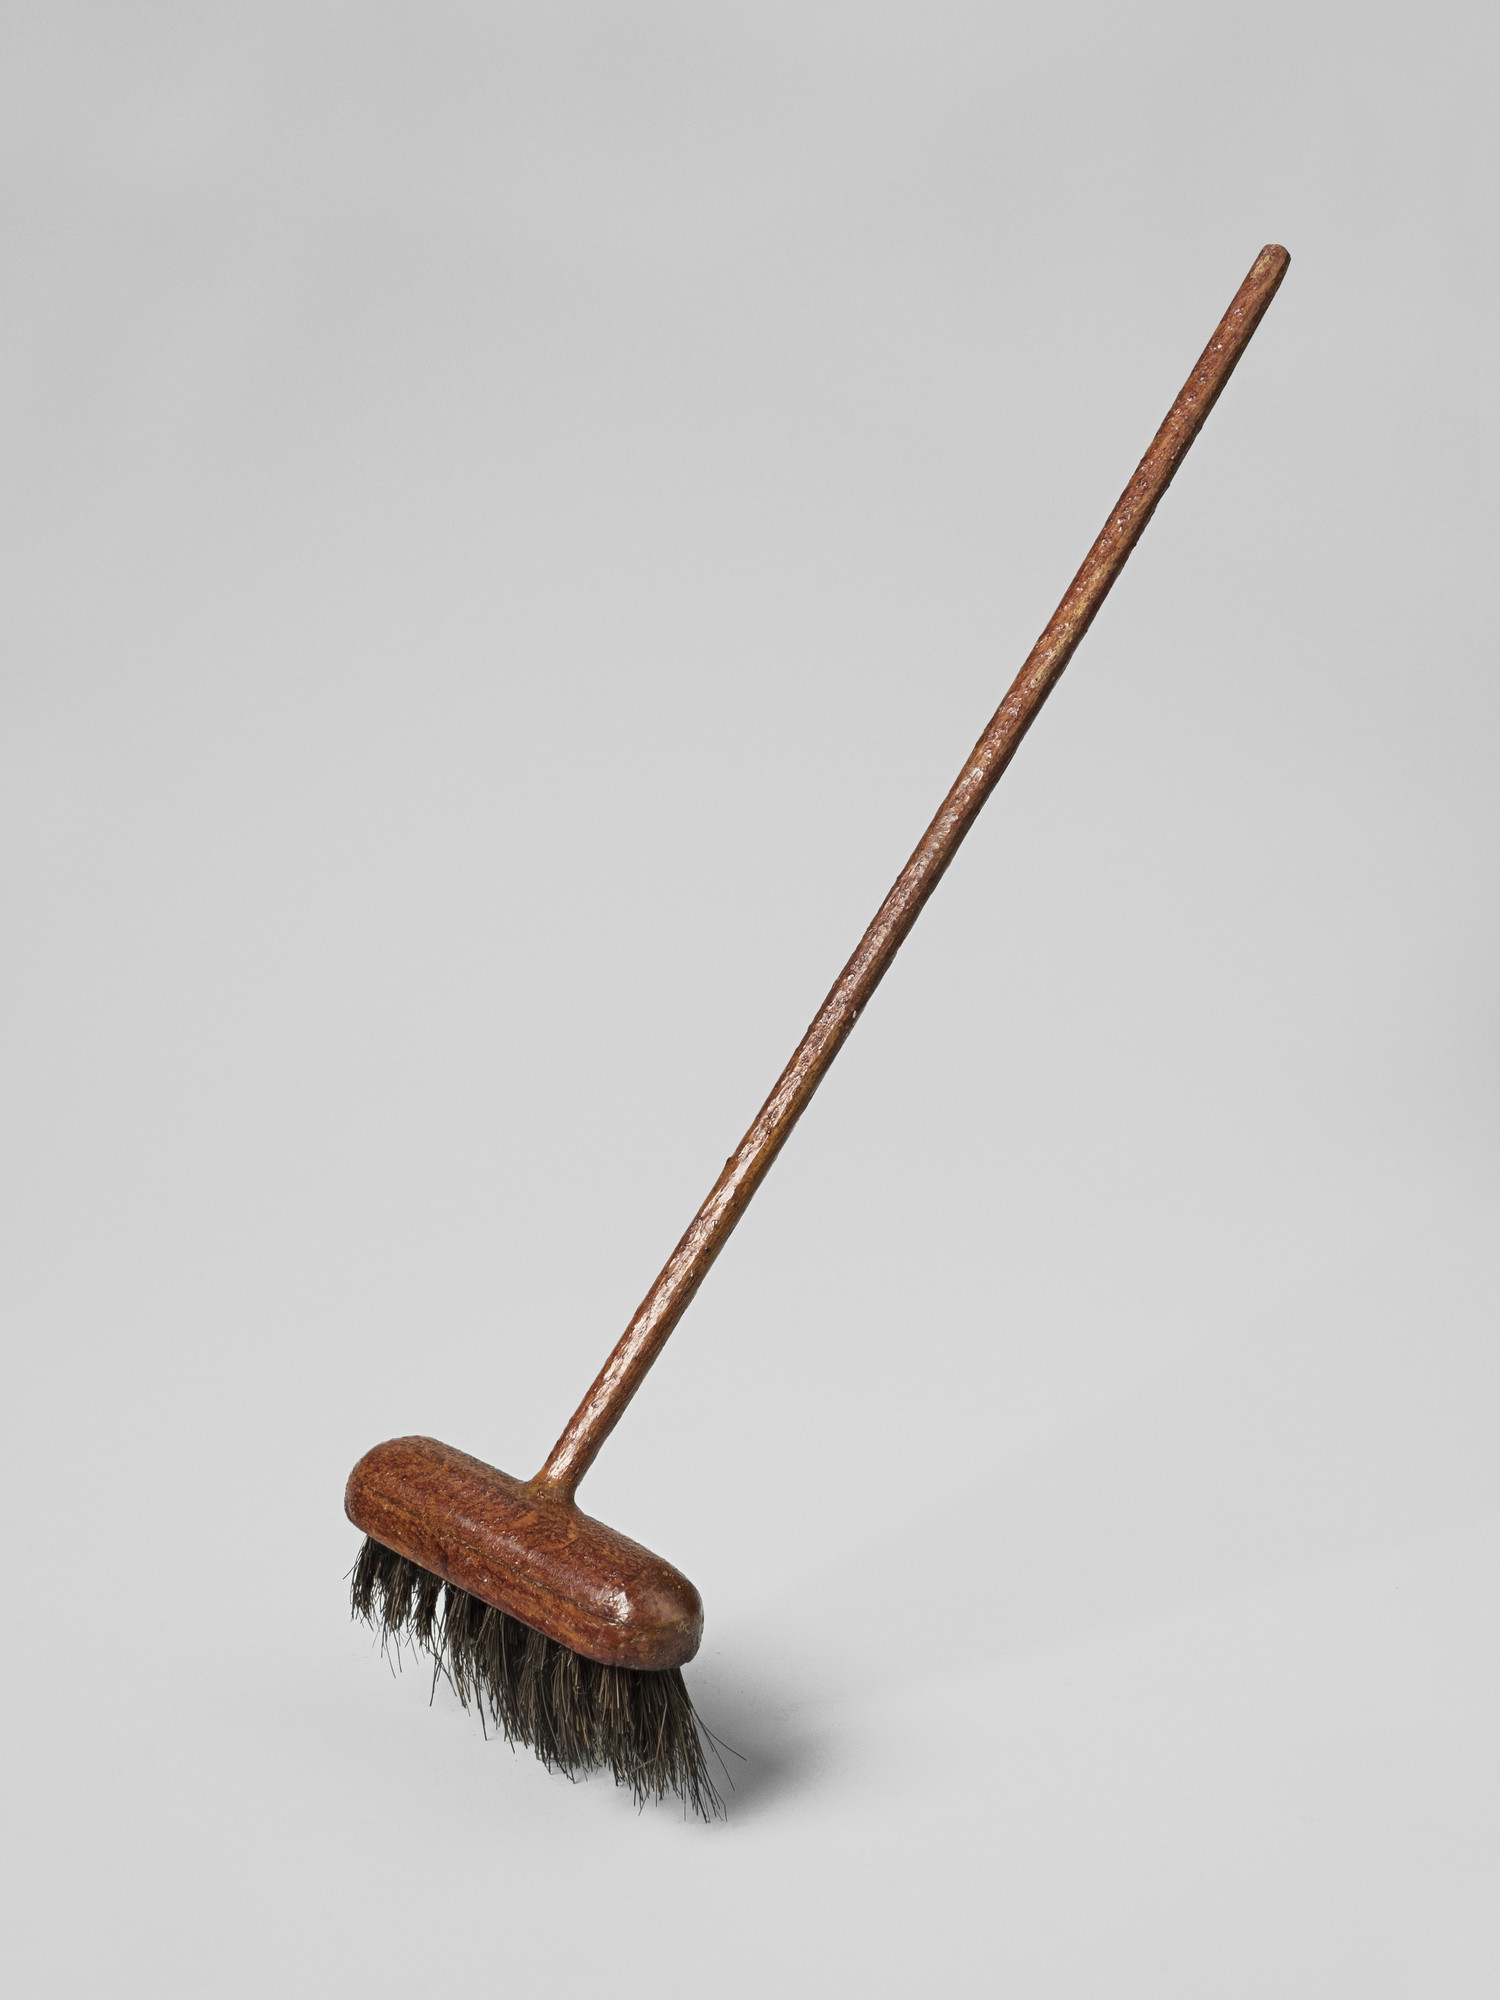 Miniature red painted wooden broom with dark bristles